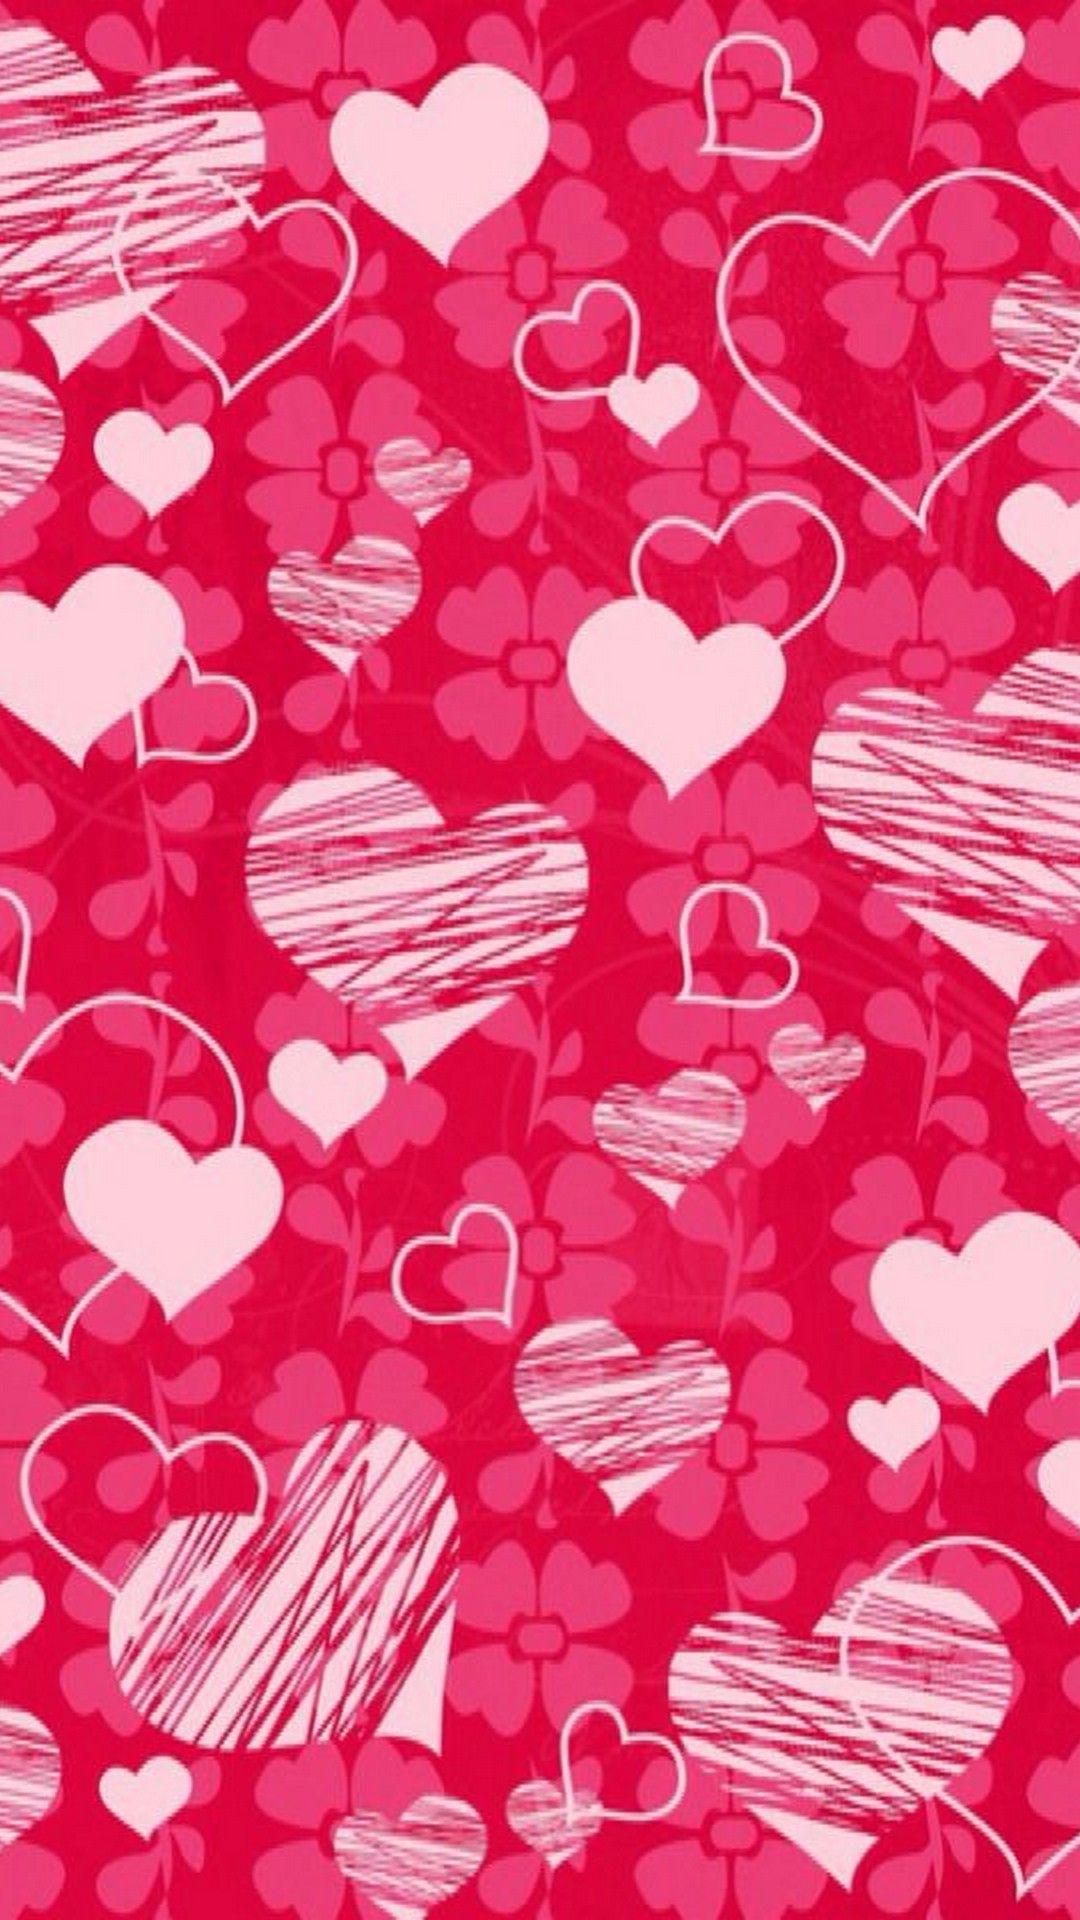 Valentine's Day iPhone Wallpaper Gallery. Heart wallpaper